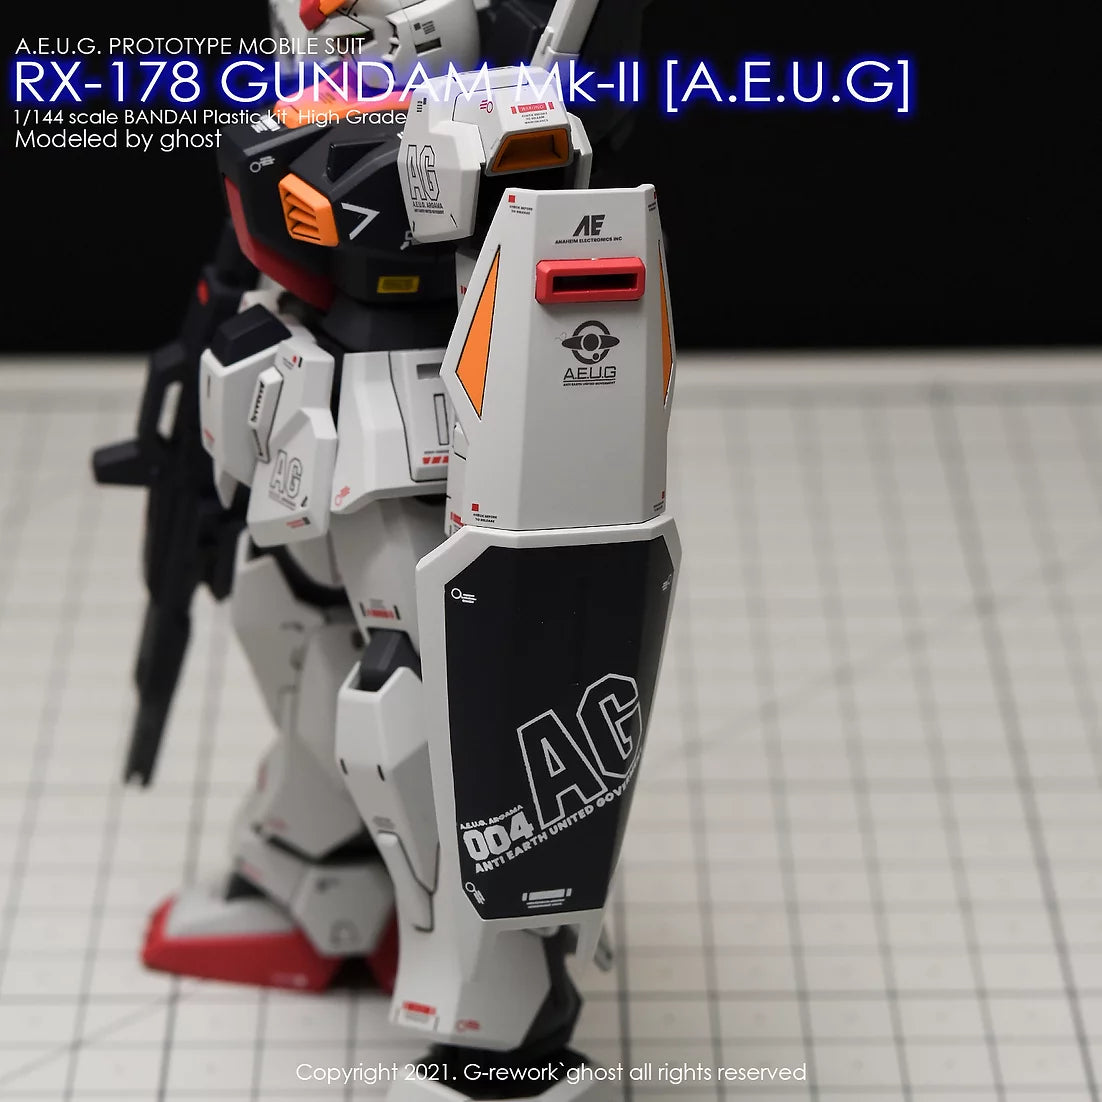 G-Rework - [HG] GUNDAM MK-II (A.E.U.G.) - Water Slide Decals